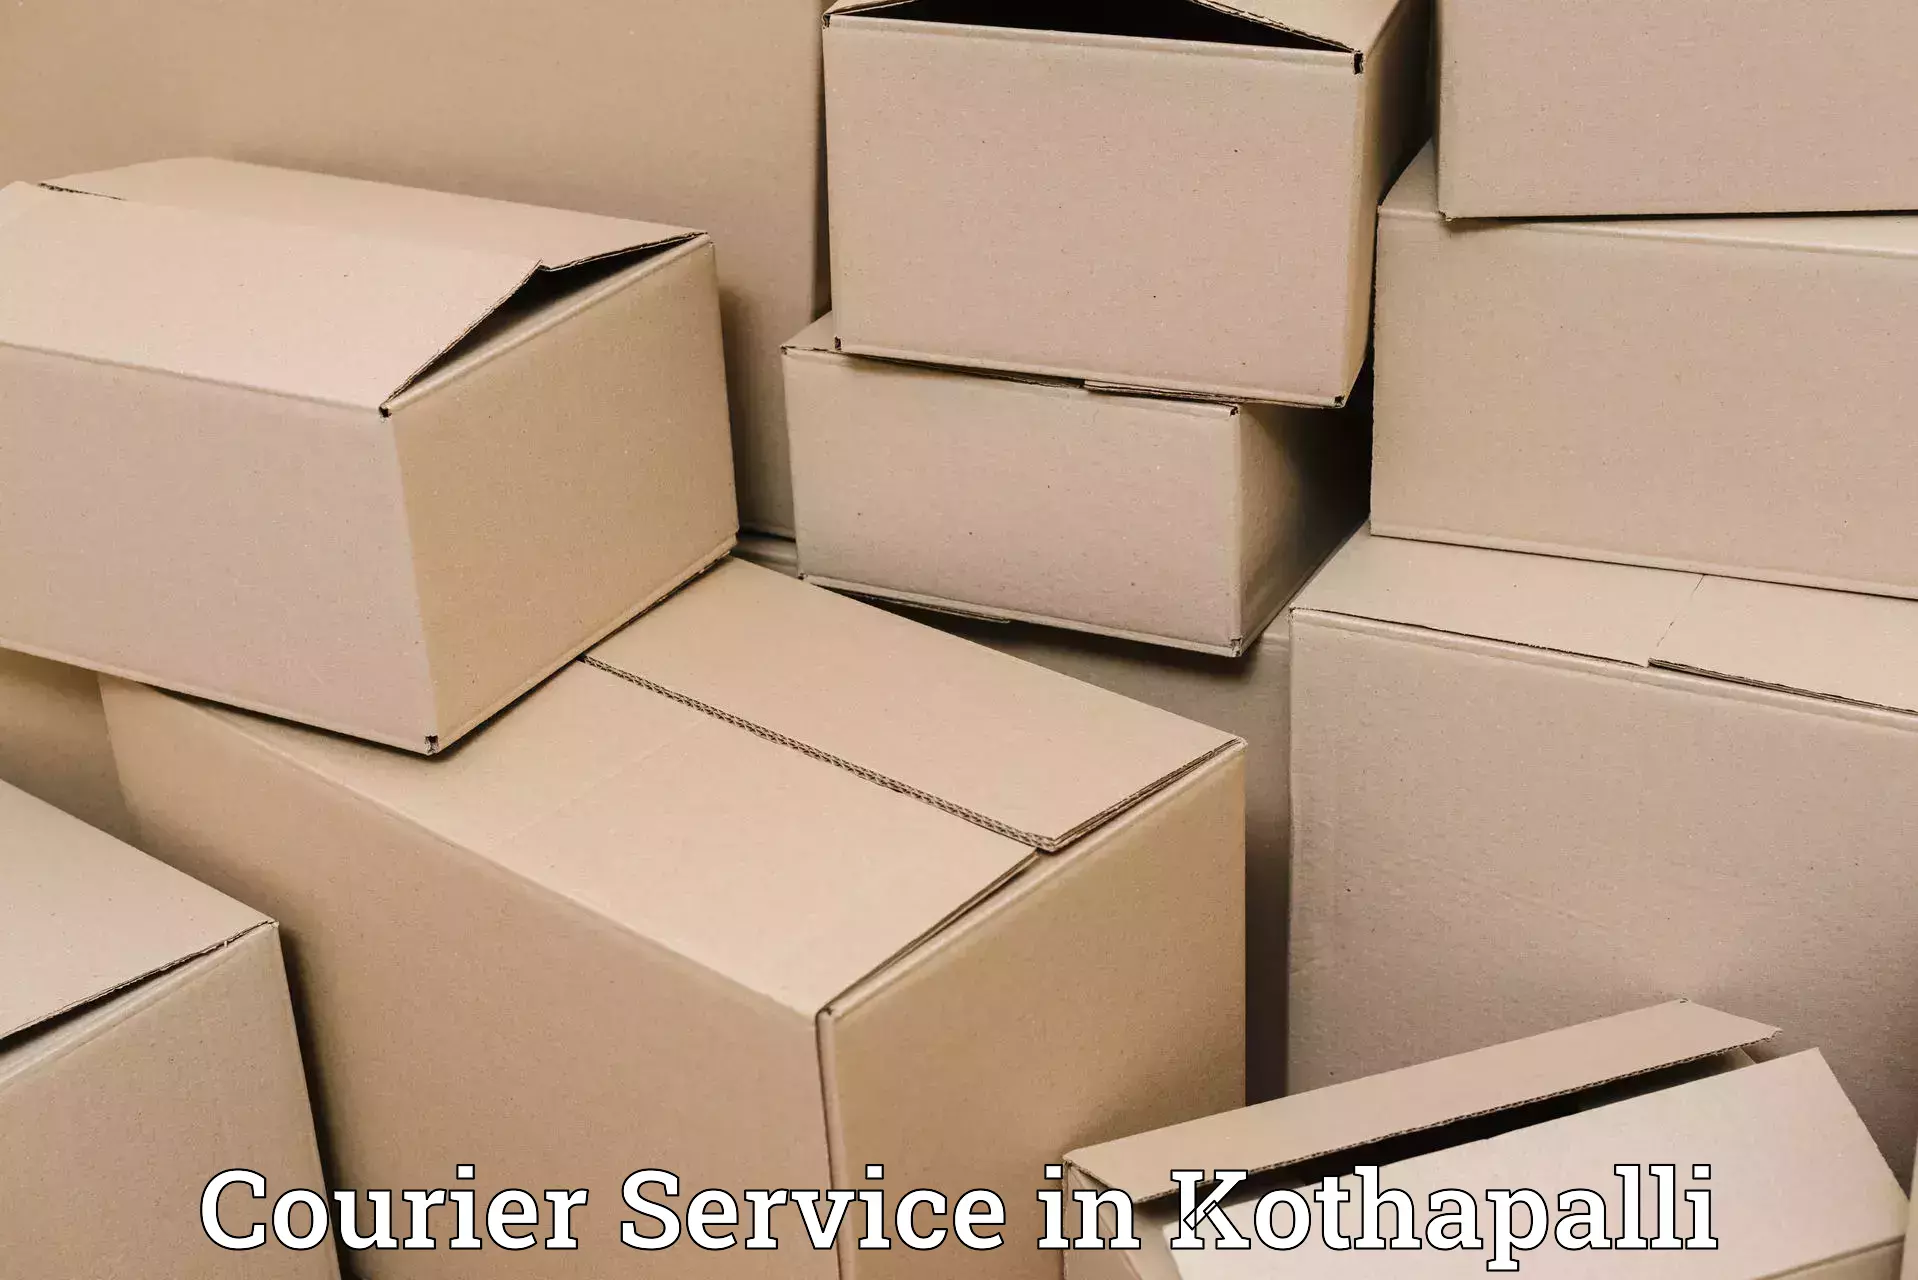 Lightweight parcel options in Kothapalli